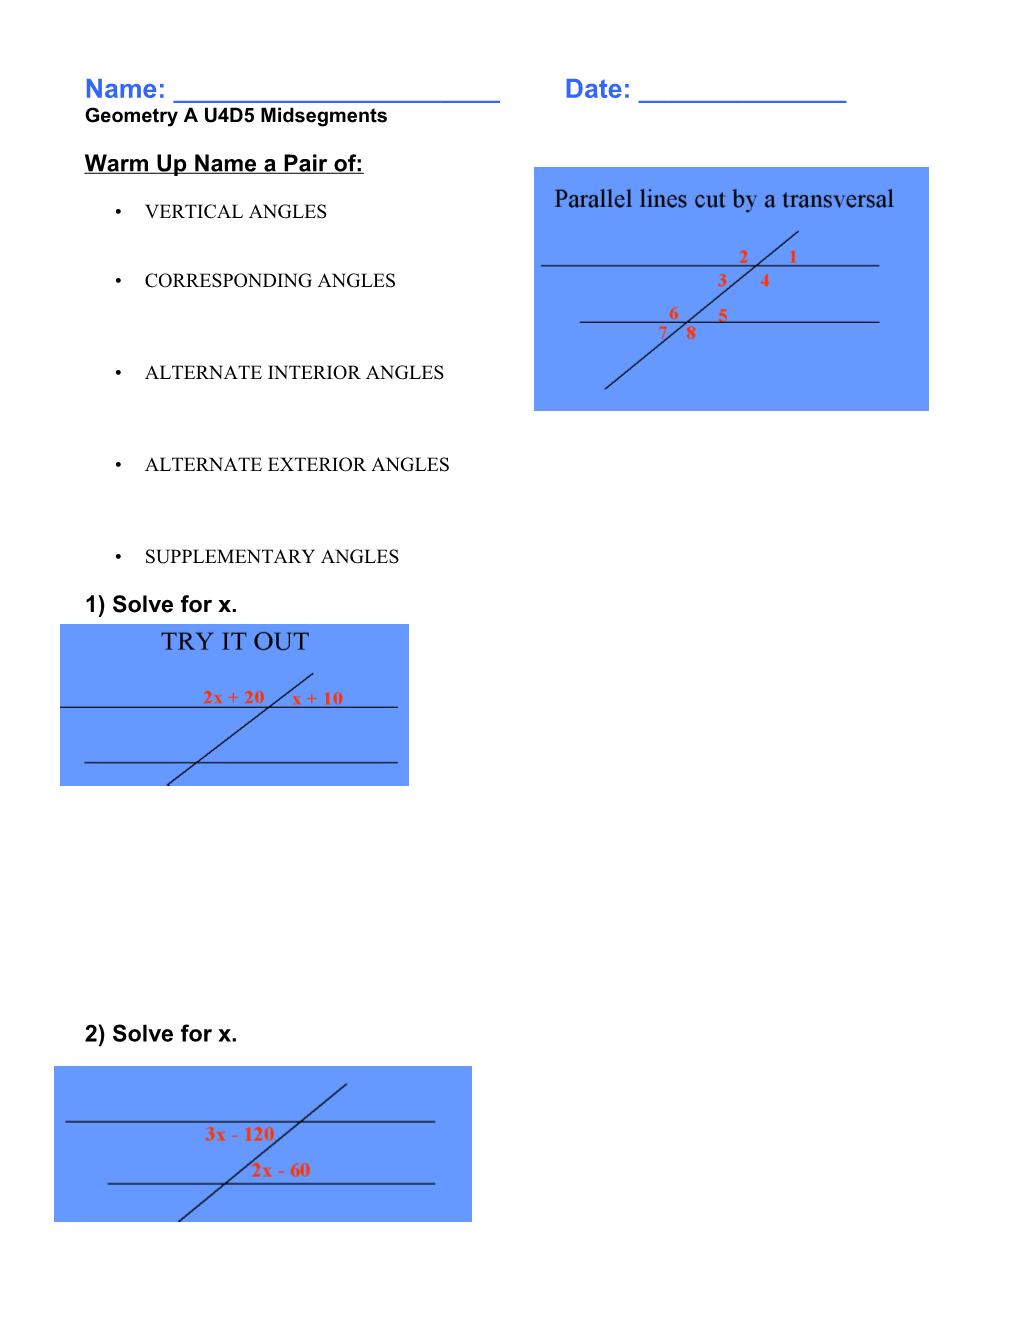 Geometry a U4D5 Midsegments